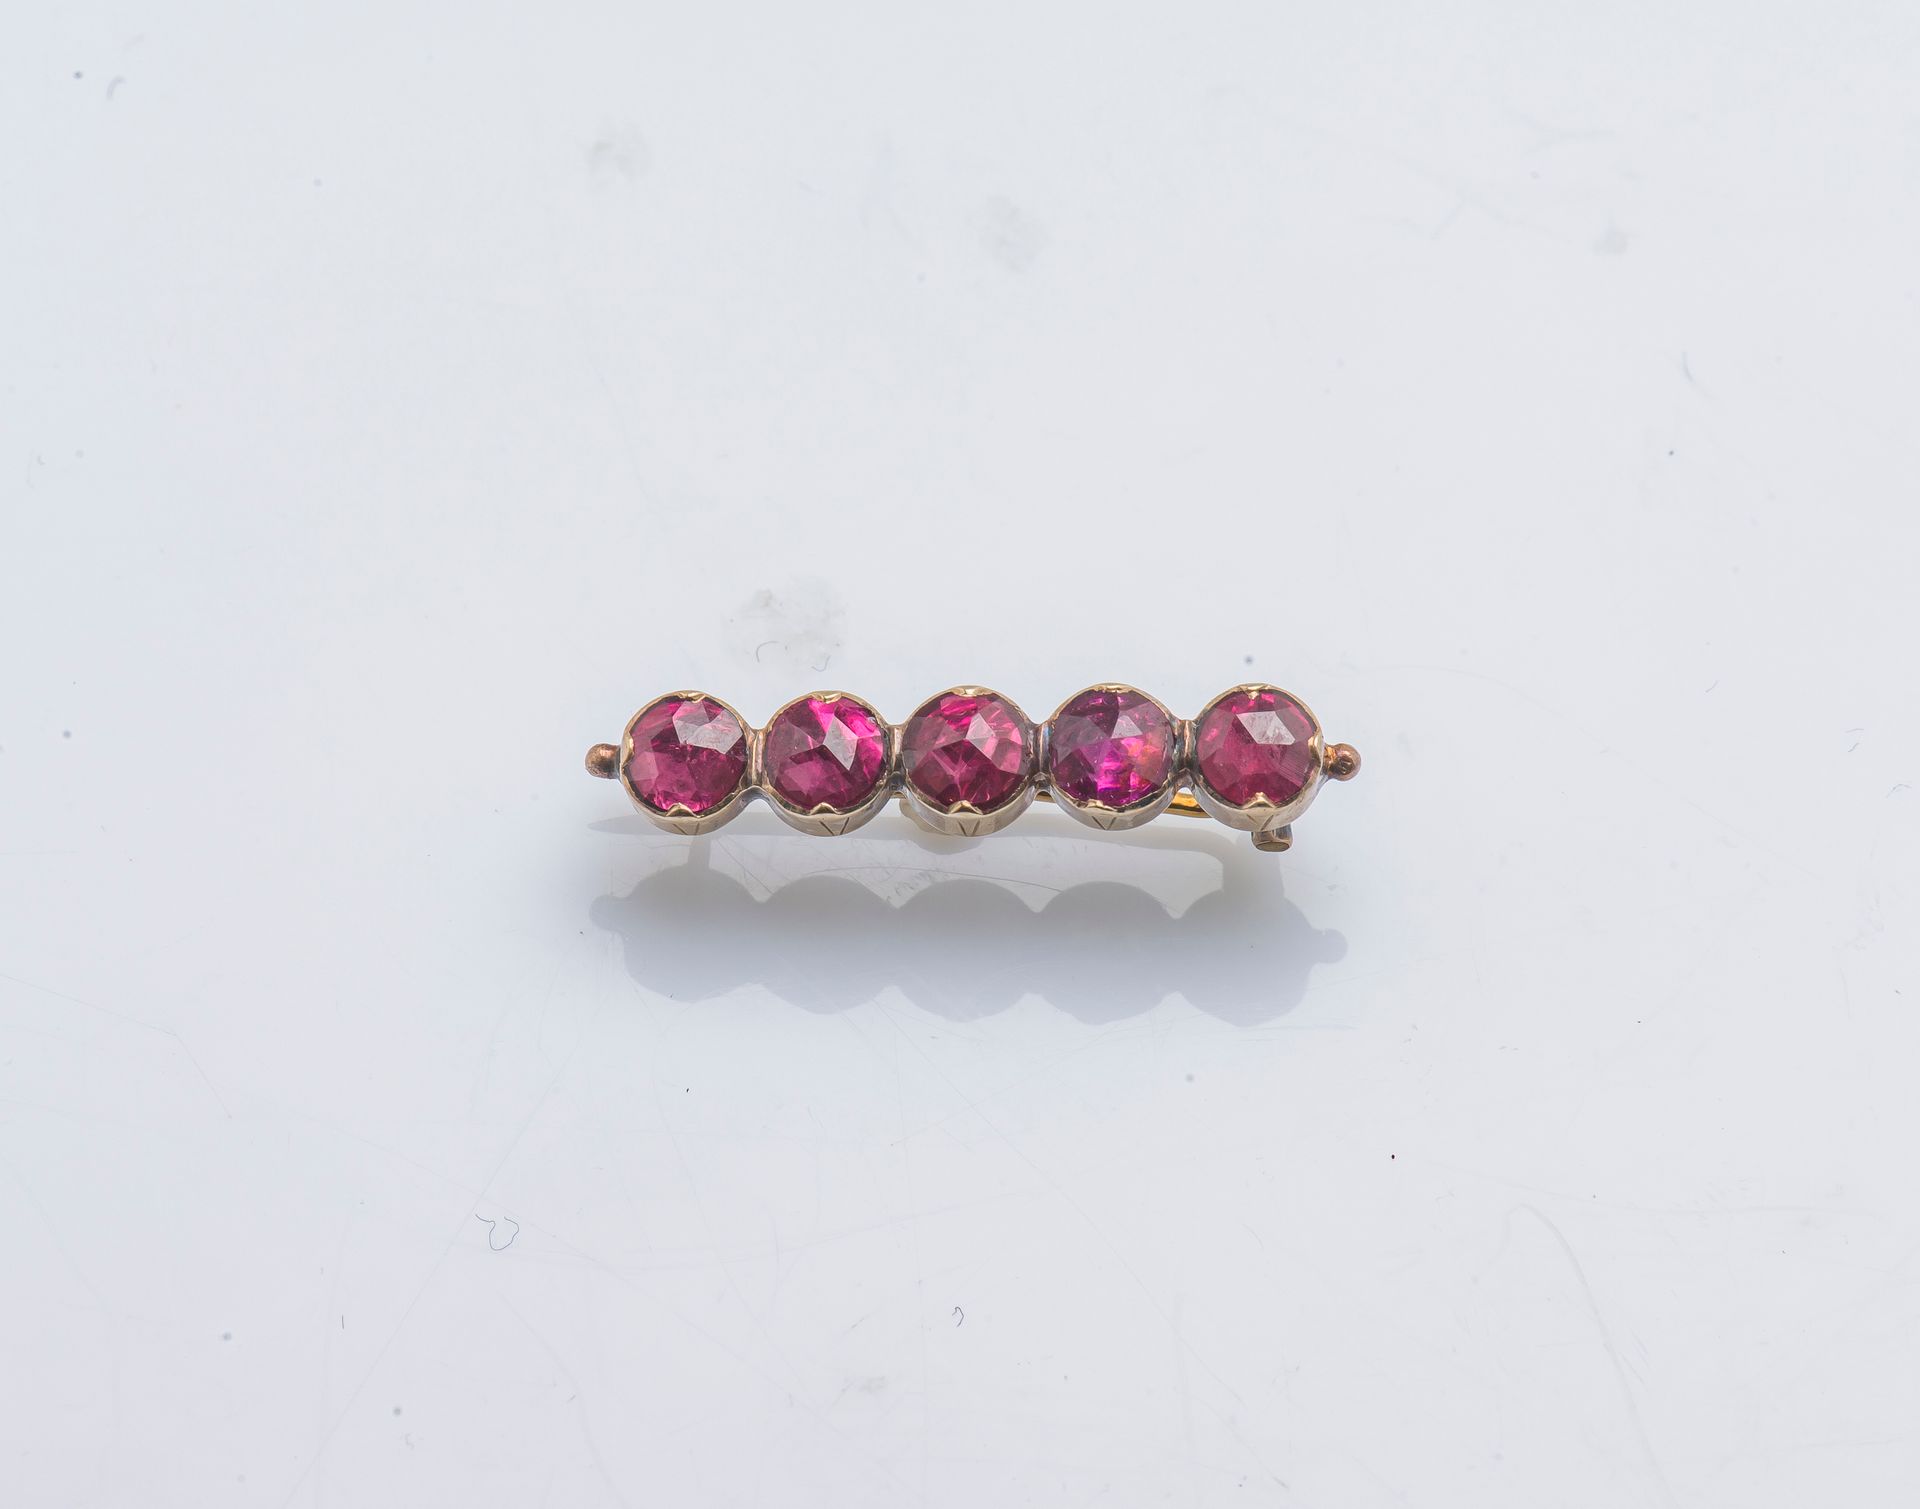 Null 小胸针由18克拉（75万分之一）的黄金和vermeil（925万分之一）制成，上面镶嵌着五颗粉红色的宝石，仿佛是红宝石。19世纪。

长度：2,5 c&hellip;